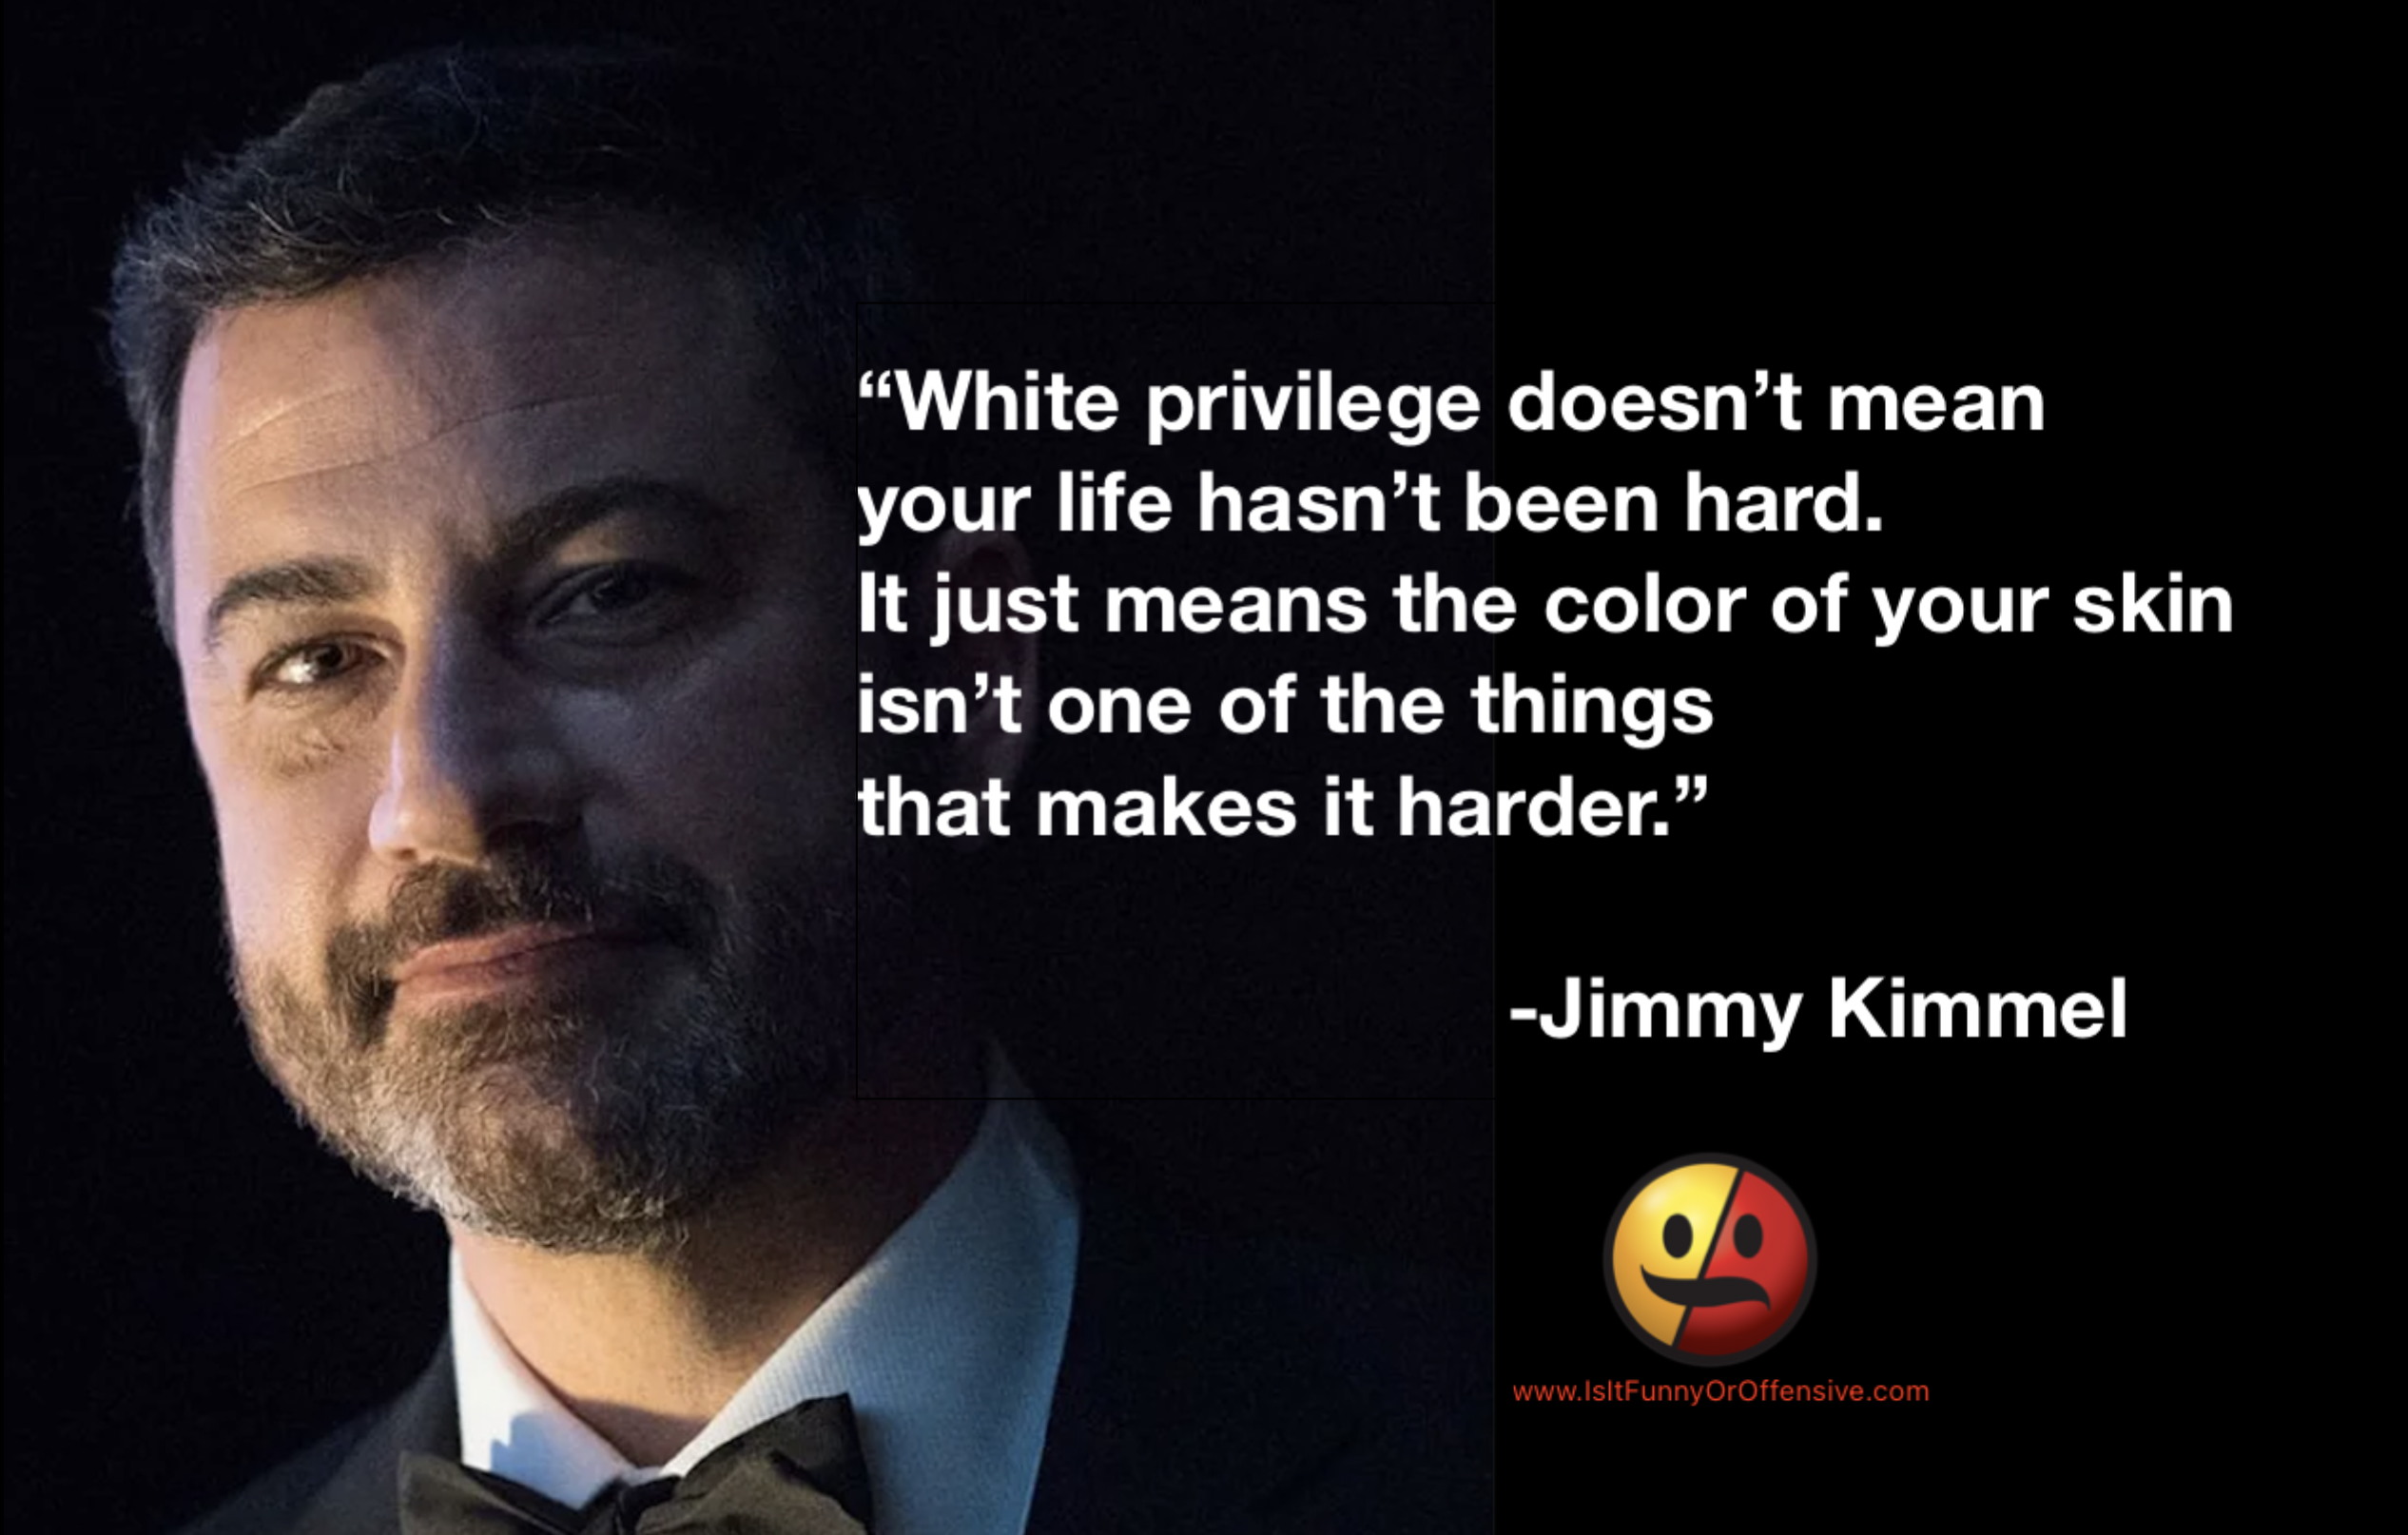 Jimmy Kimmel on White Privilege